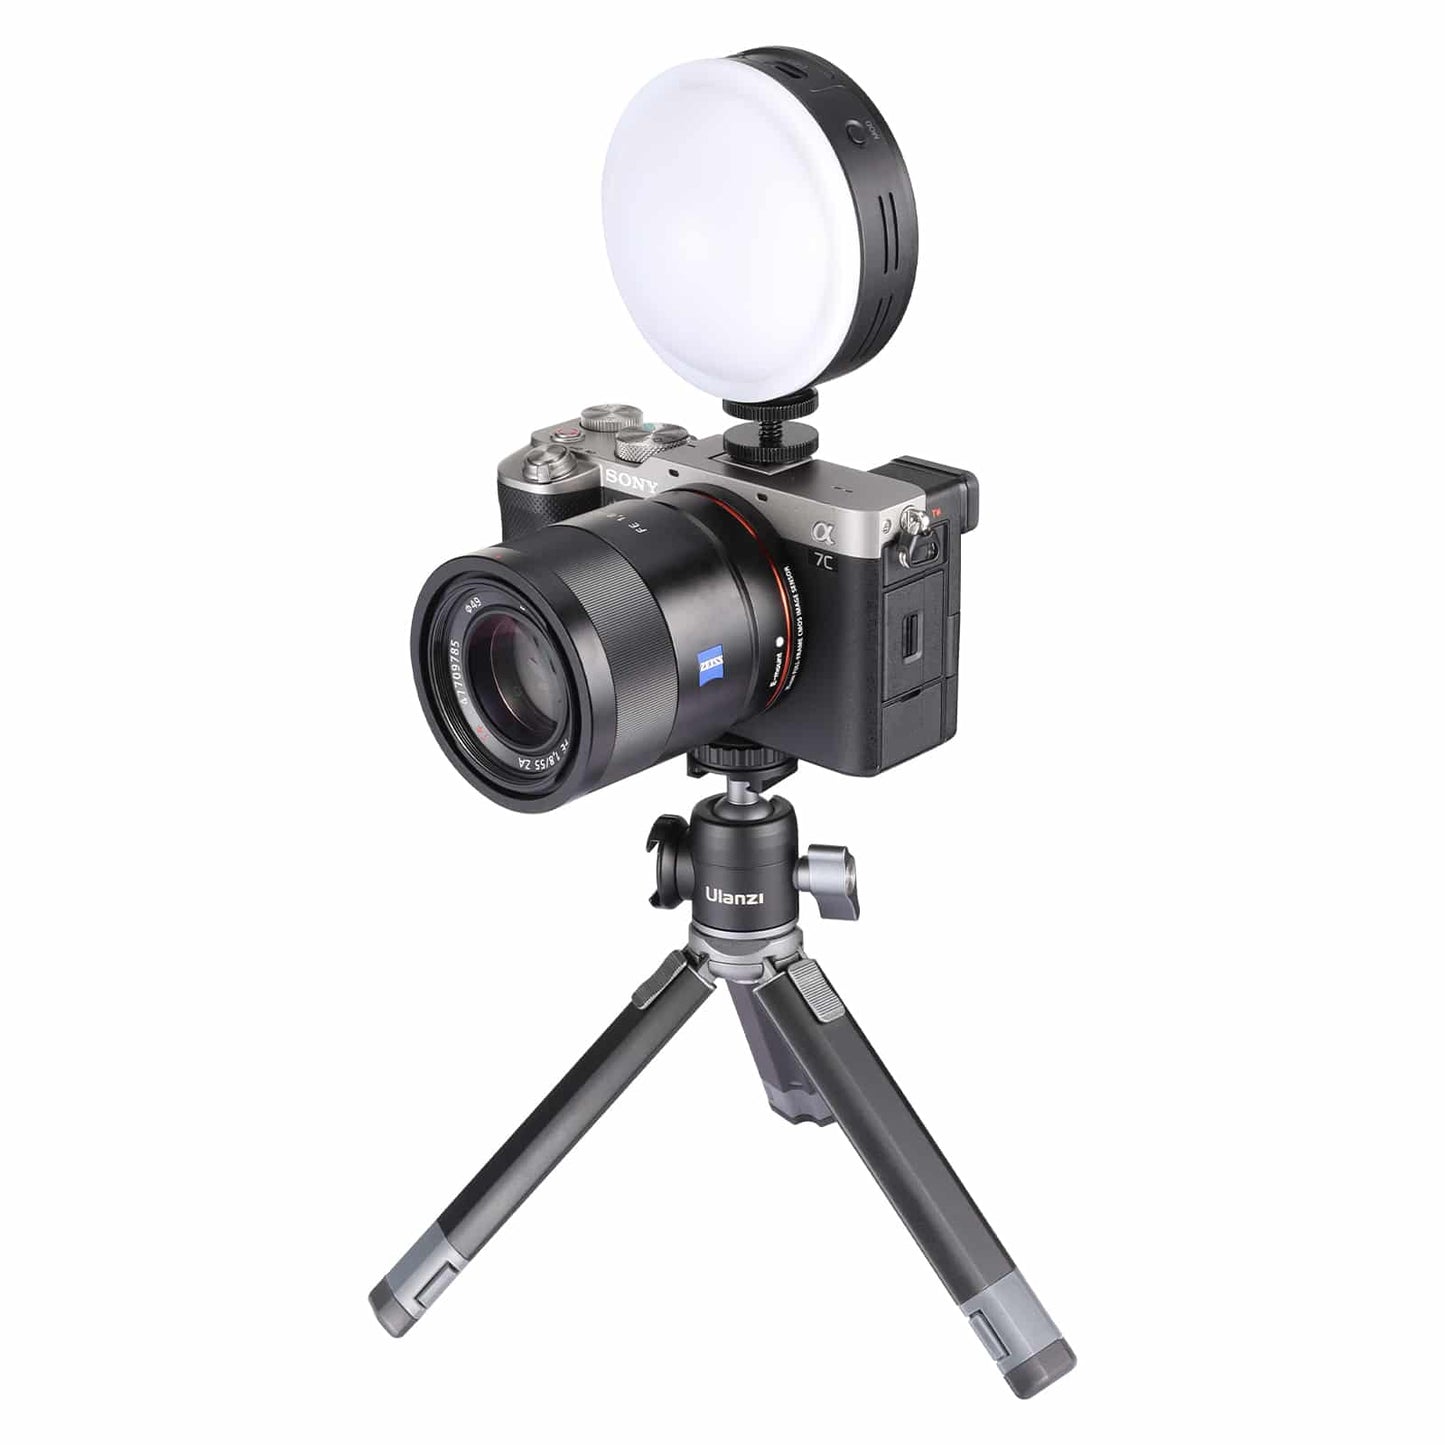 Ulanzi R66 Multi Color RGB LED Video Light for Camera and Smartphone